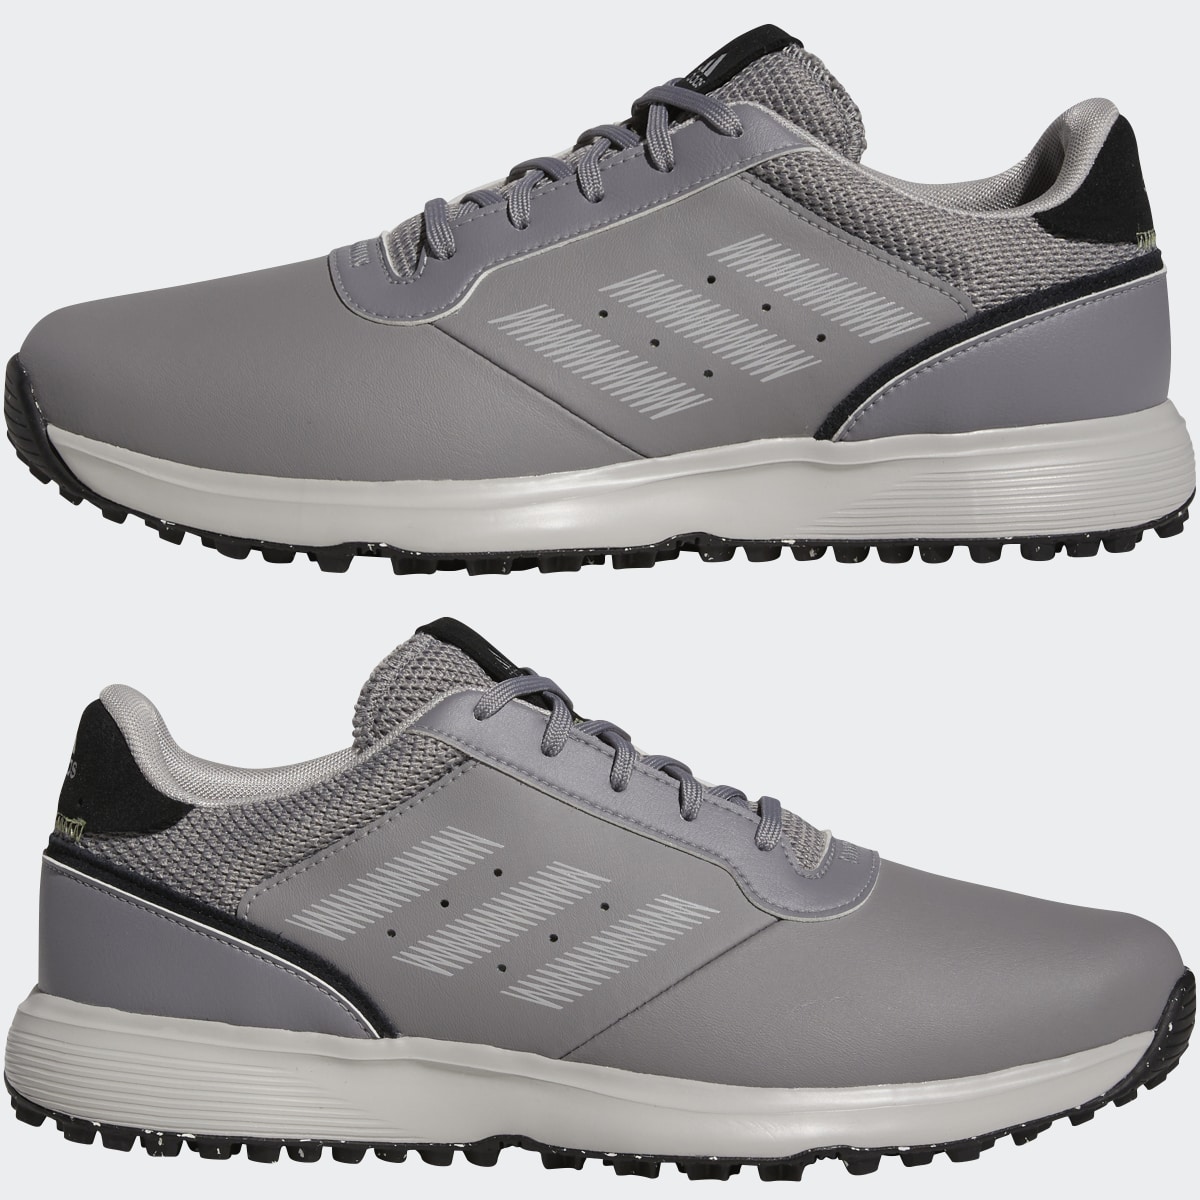 Adidas Chaussure de golf S2G sans crampons Leather. 8